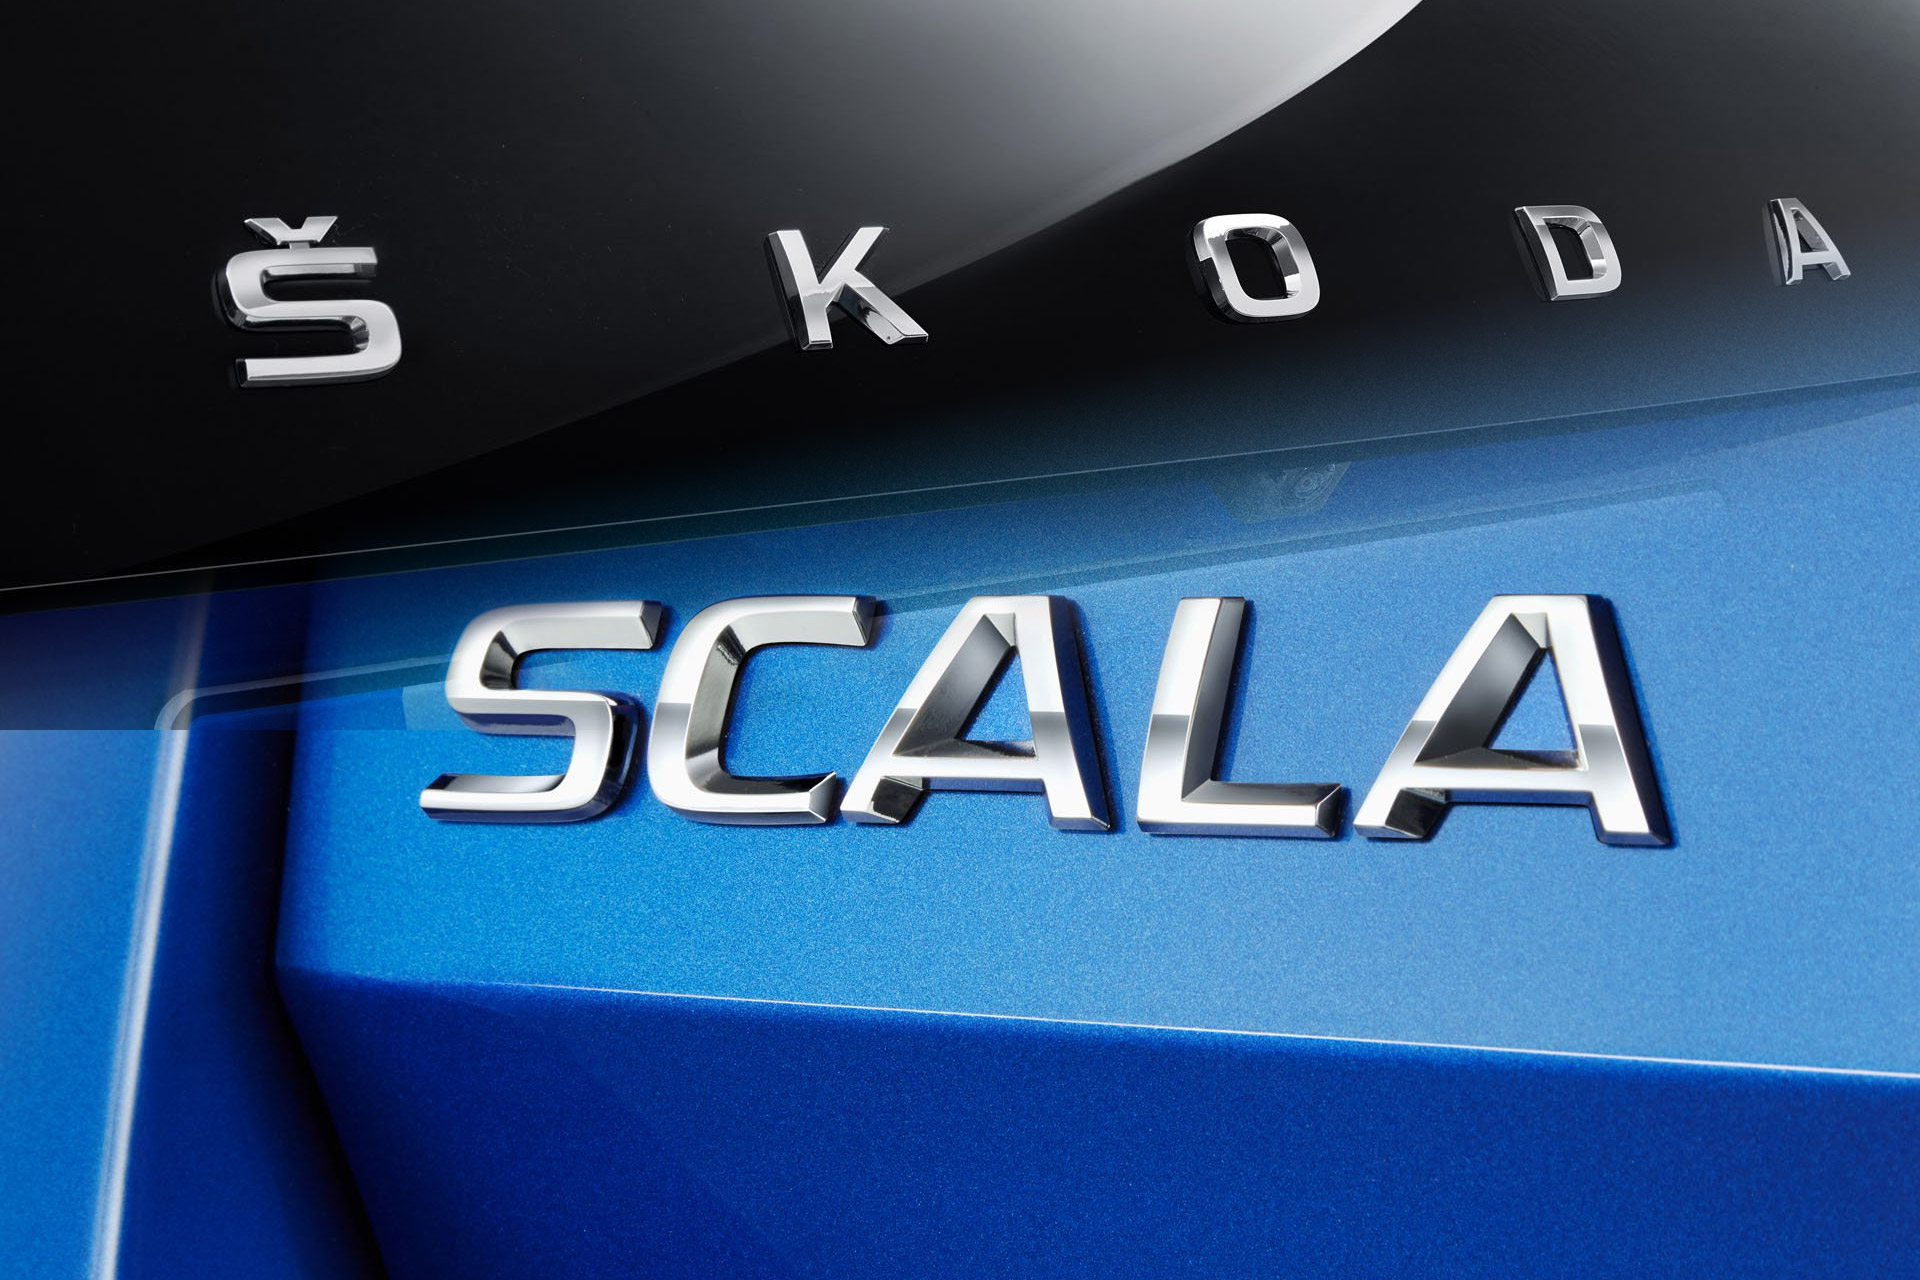 Skoda rasskazala o svoem novom avtomobile modeli Scala1